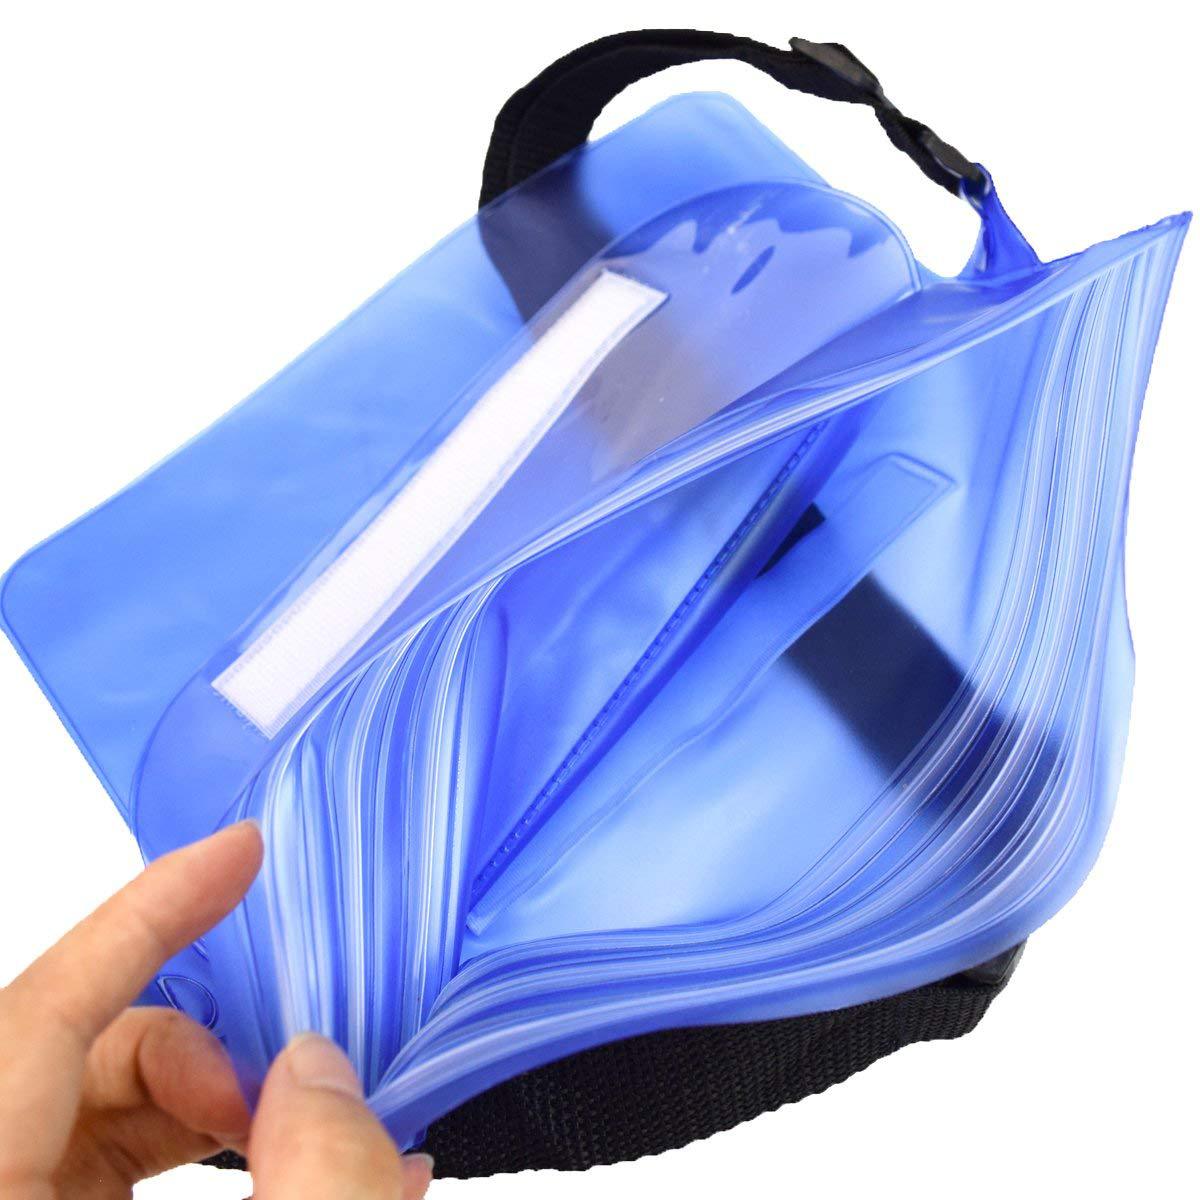 PVC waterproof pouch / waist bag - white